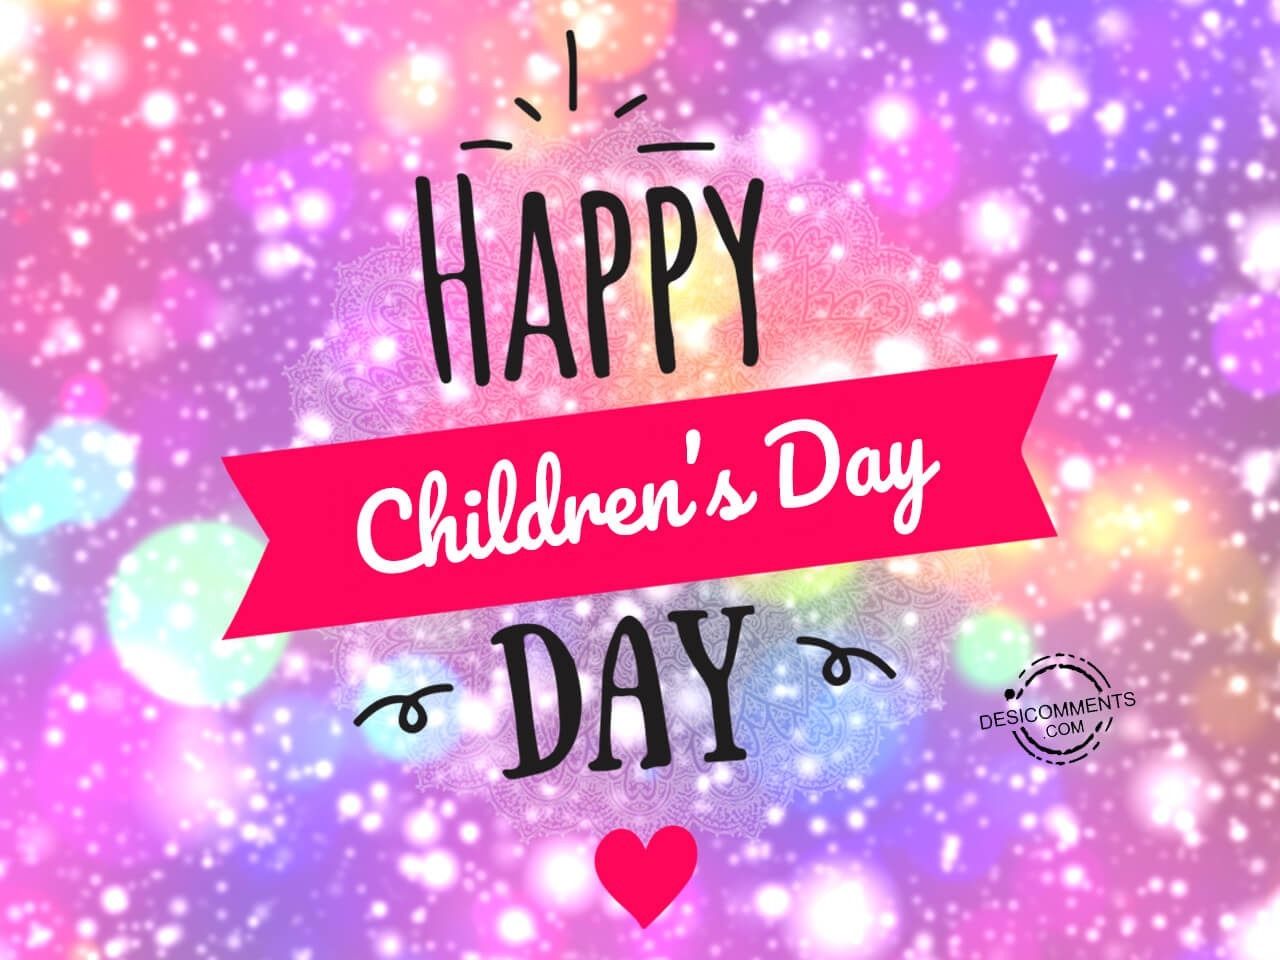 Children's Day Picture, Image, Photo